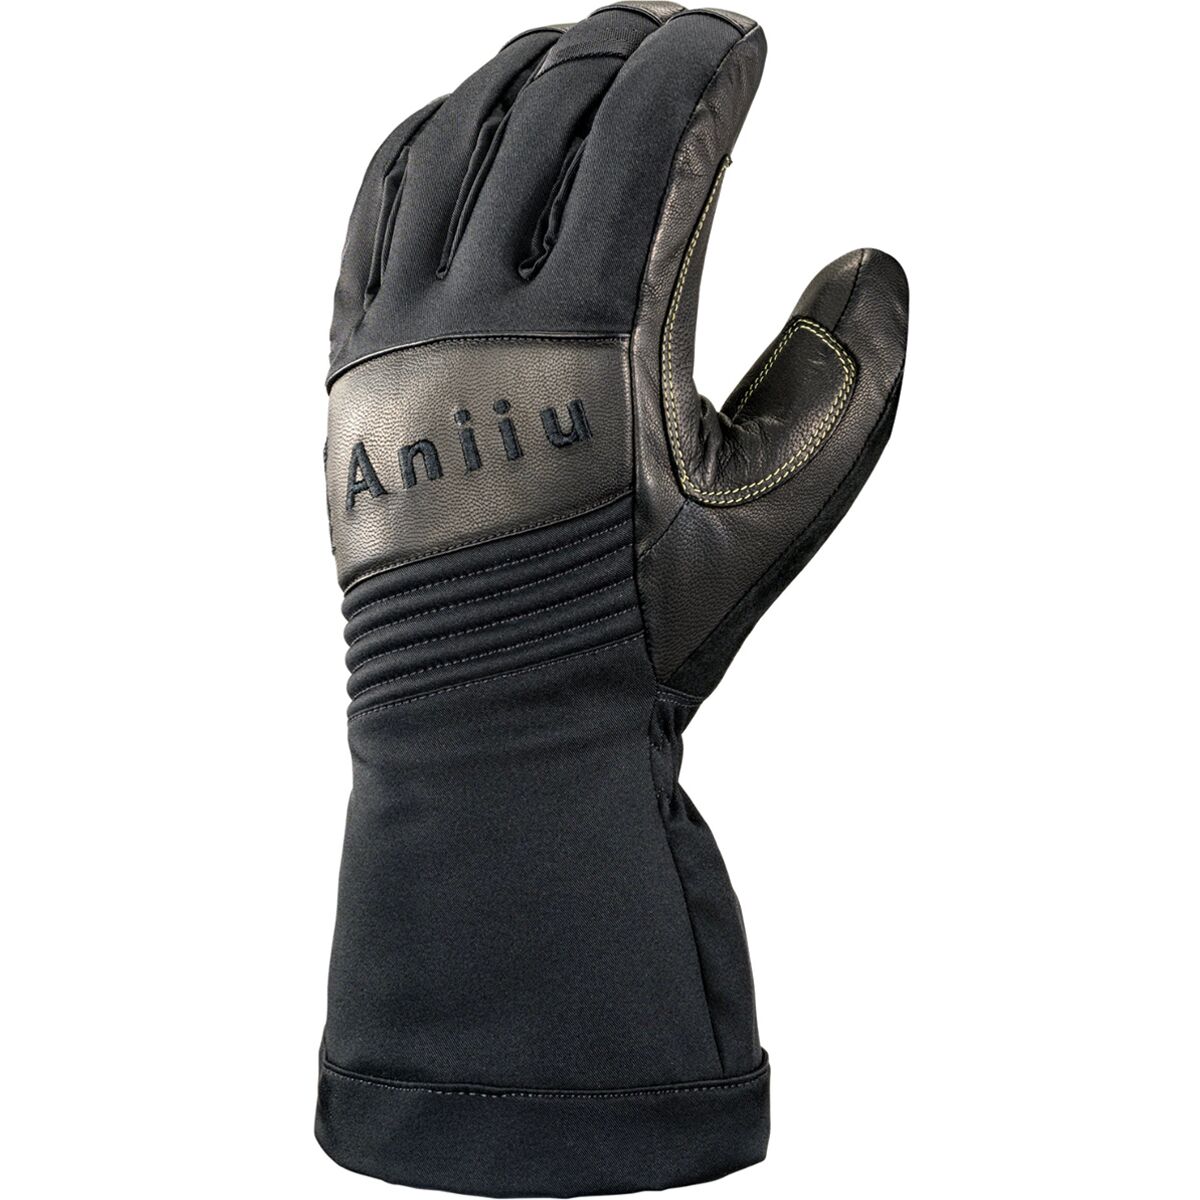 Aniiu Viinson Glove - Men's